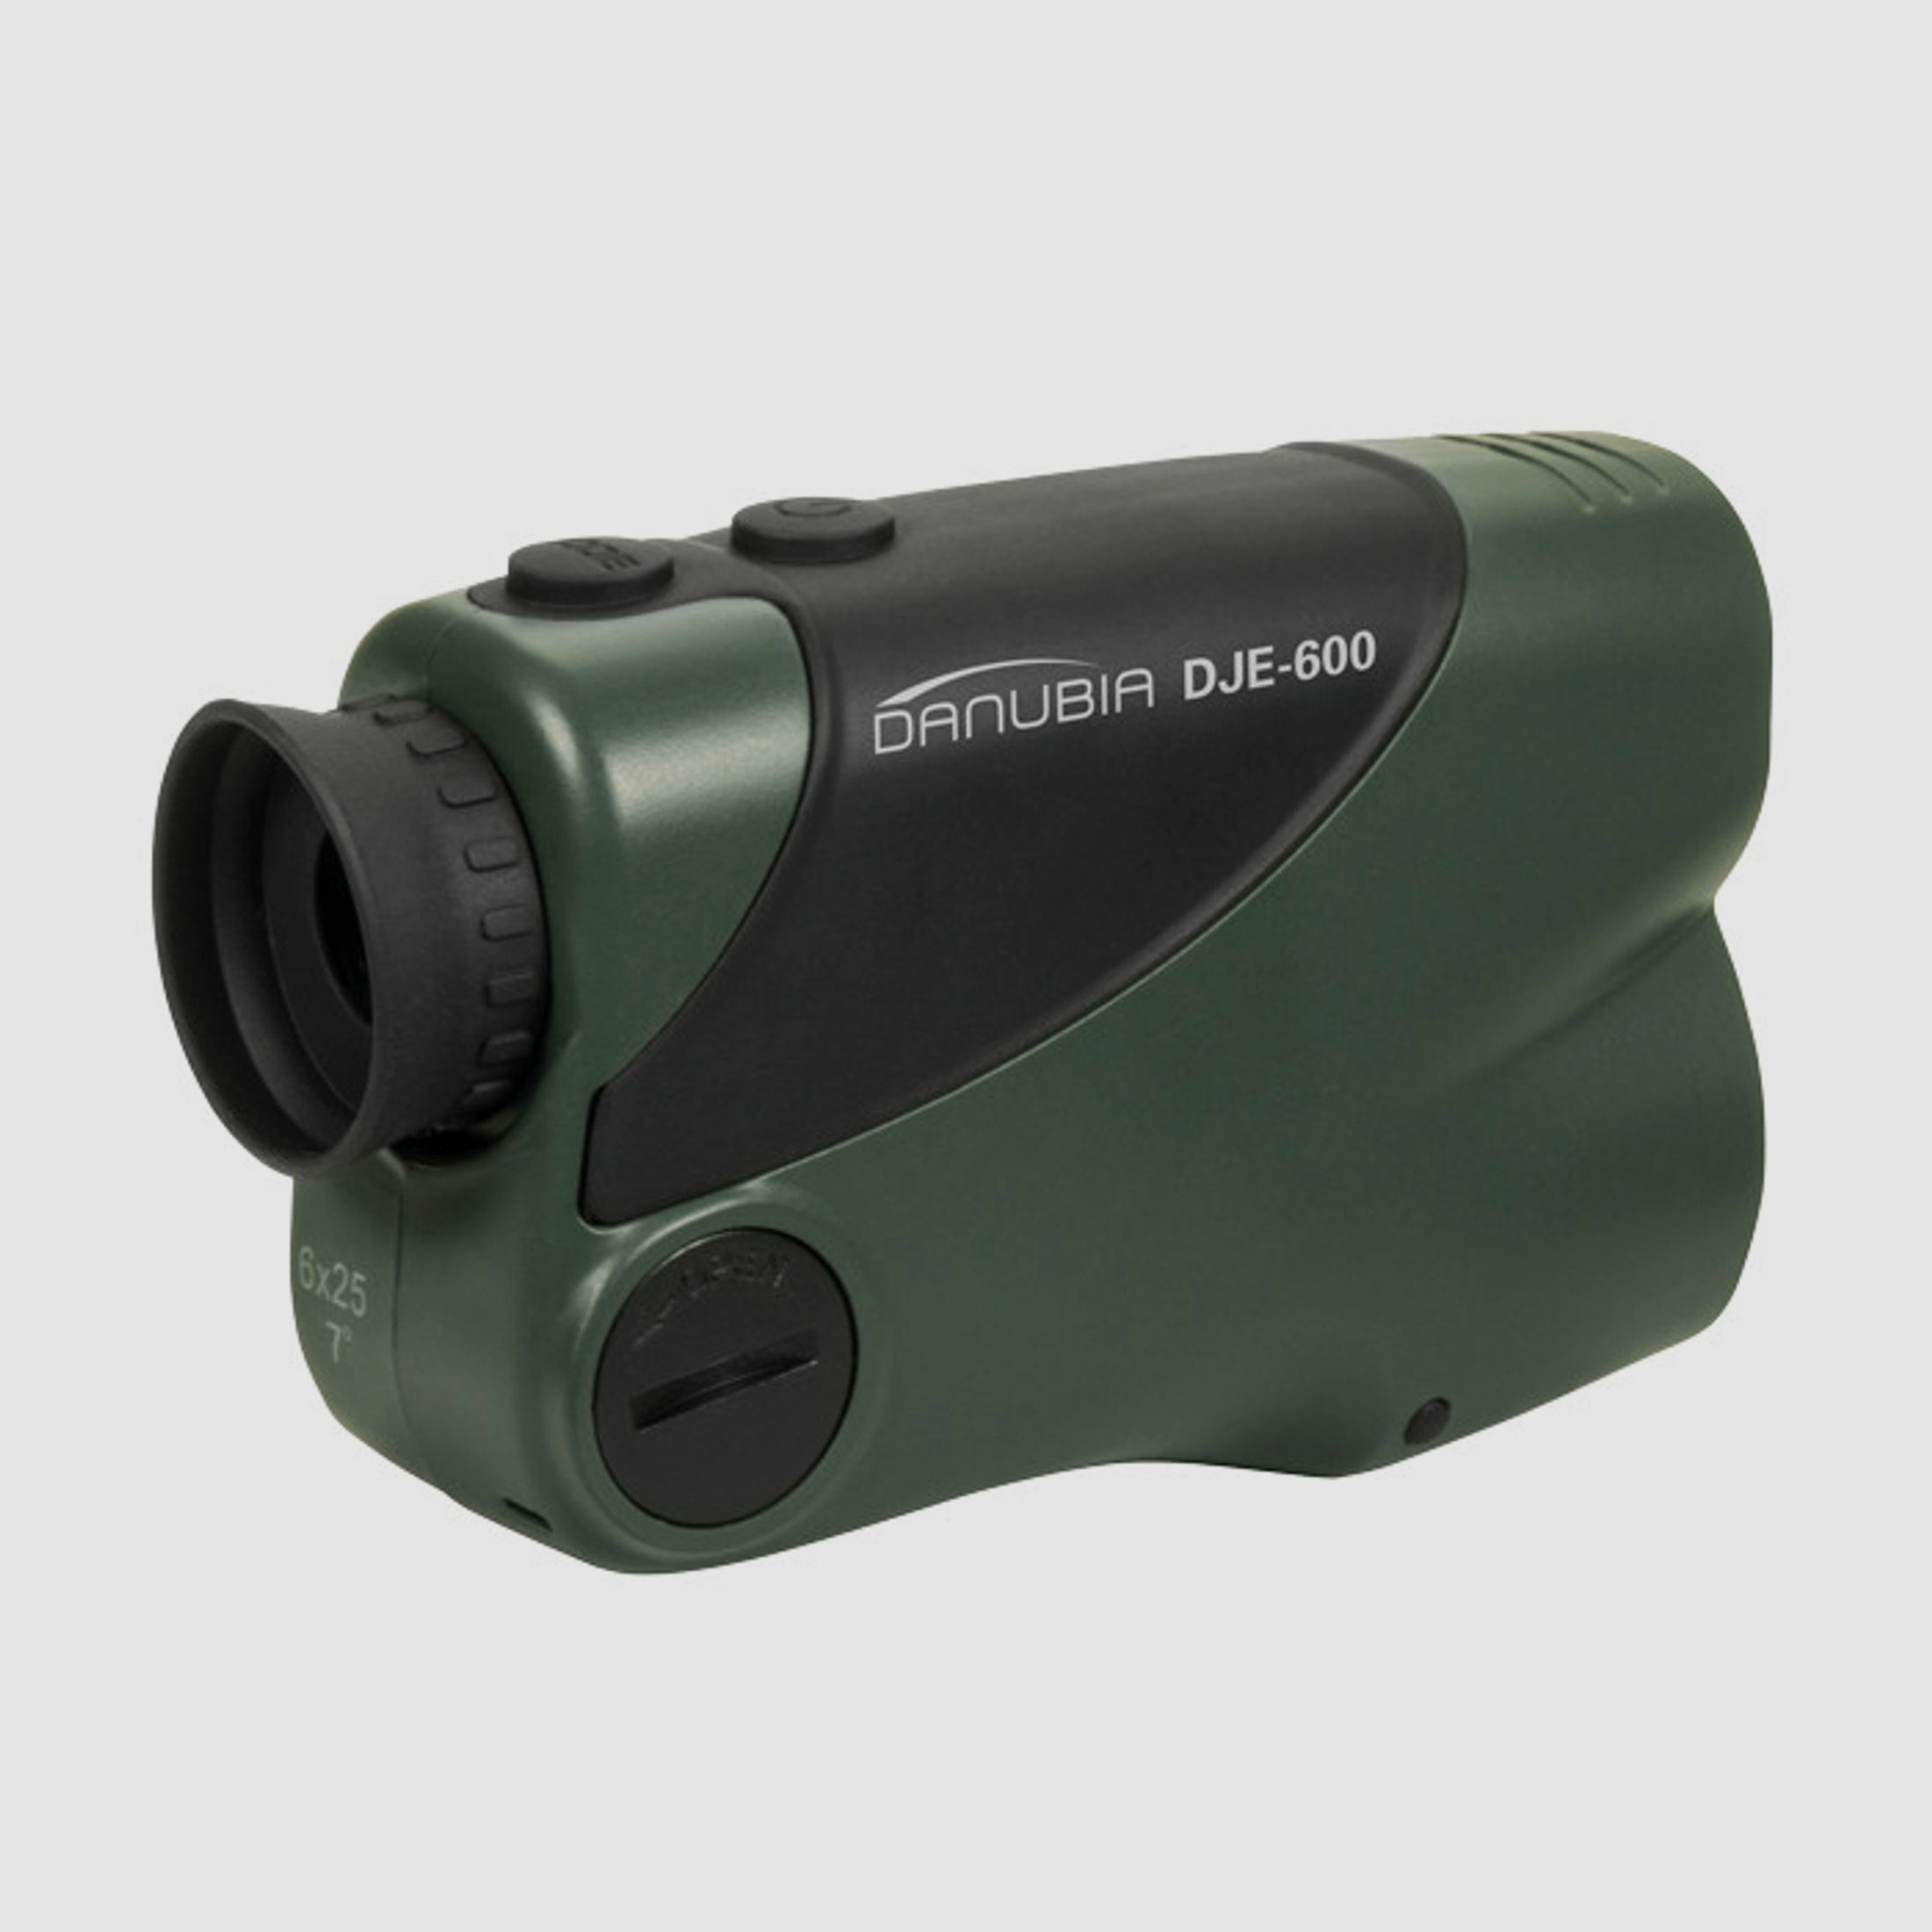 Danubia Jagd Entfernungsmesser DJE-600